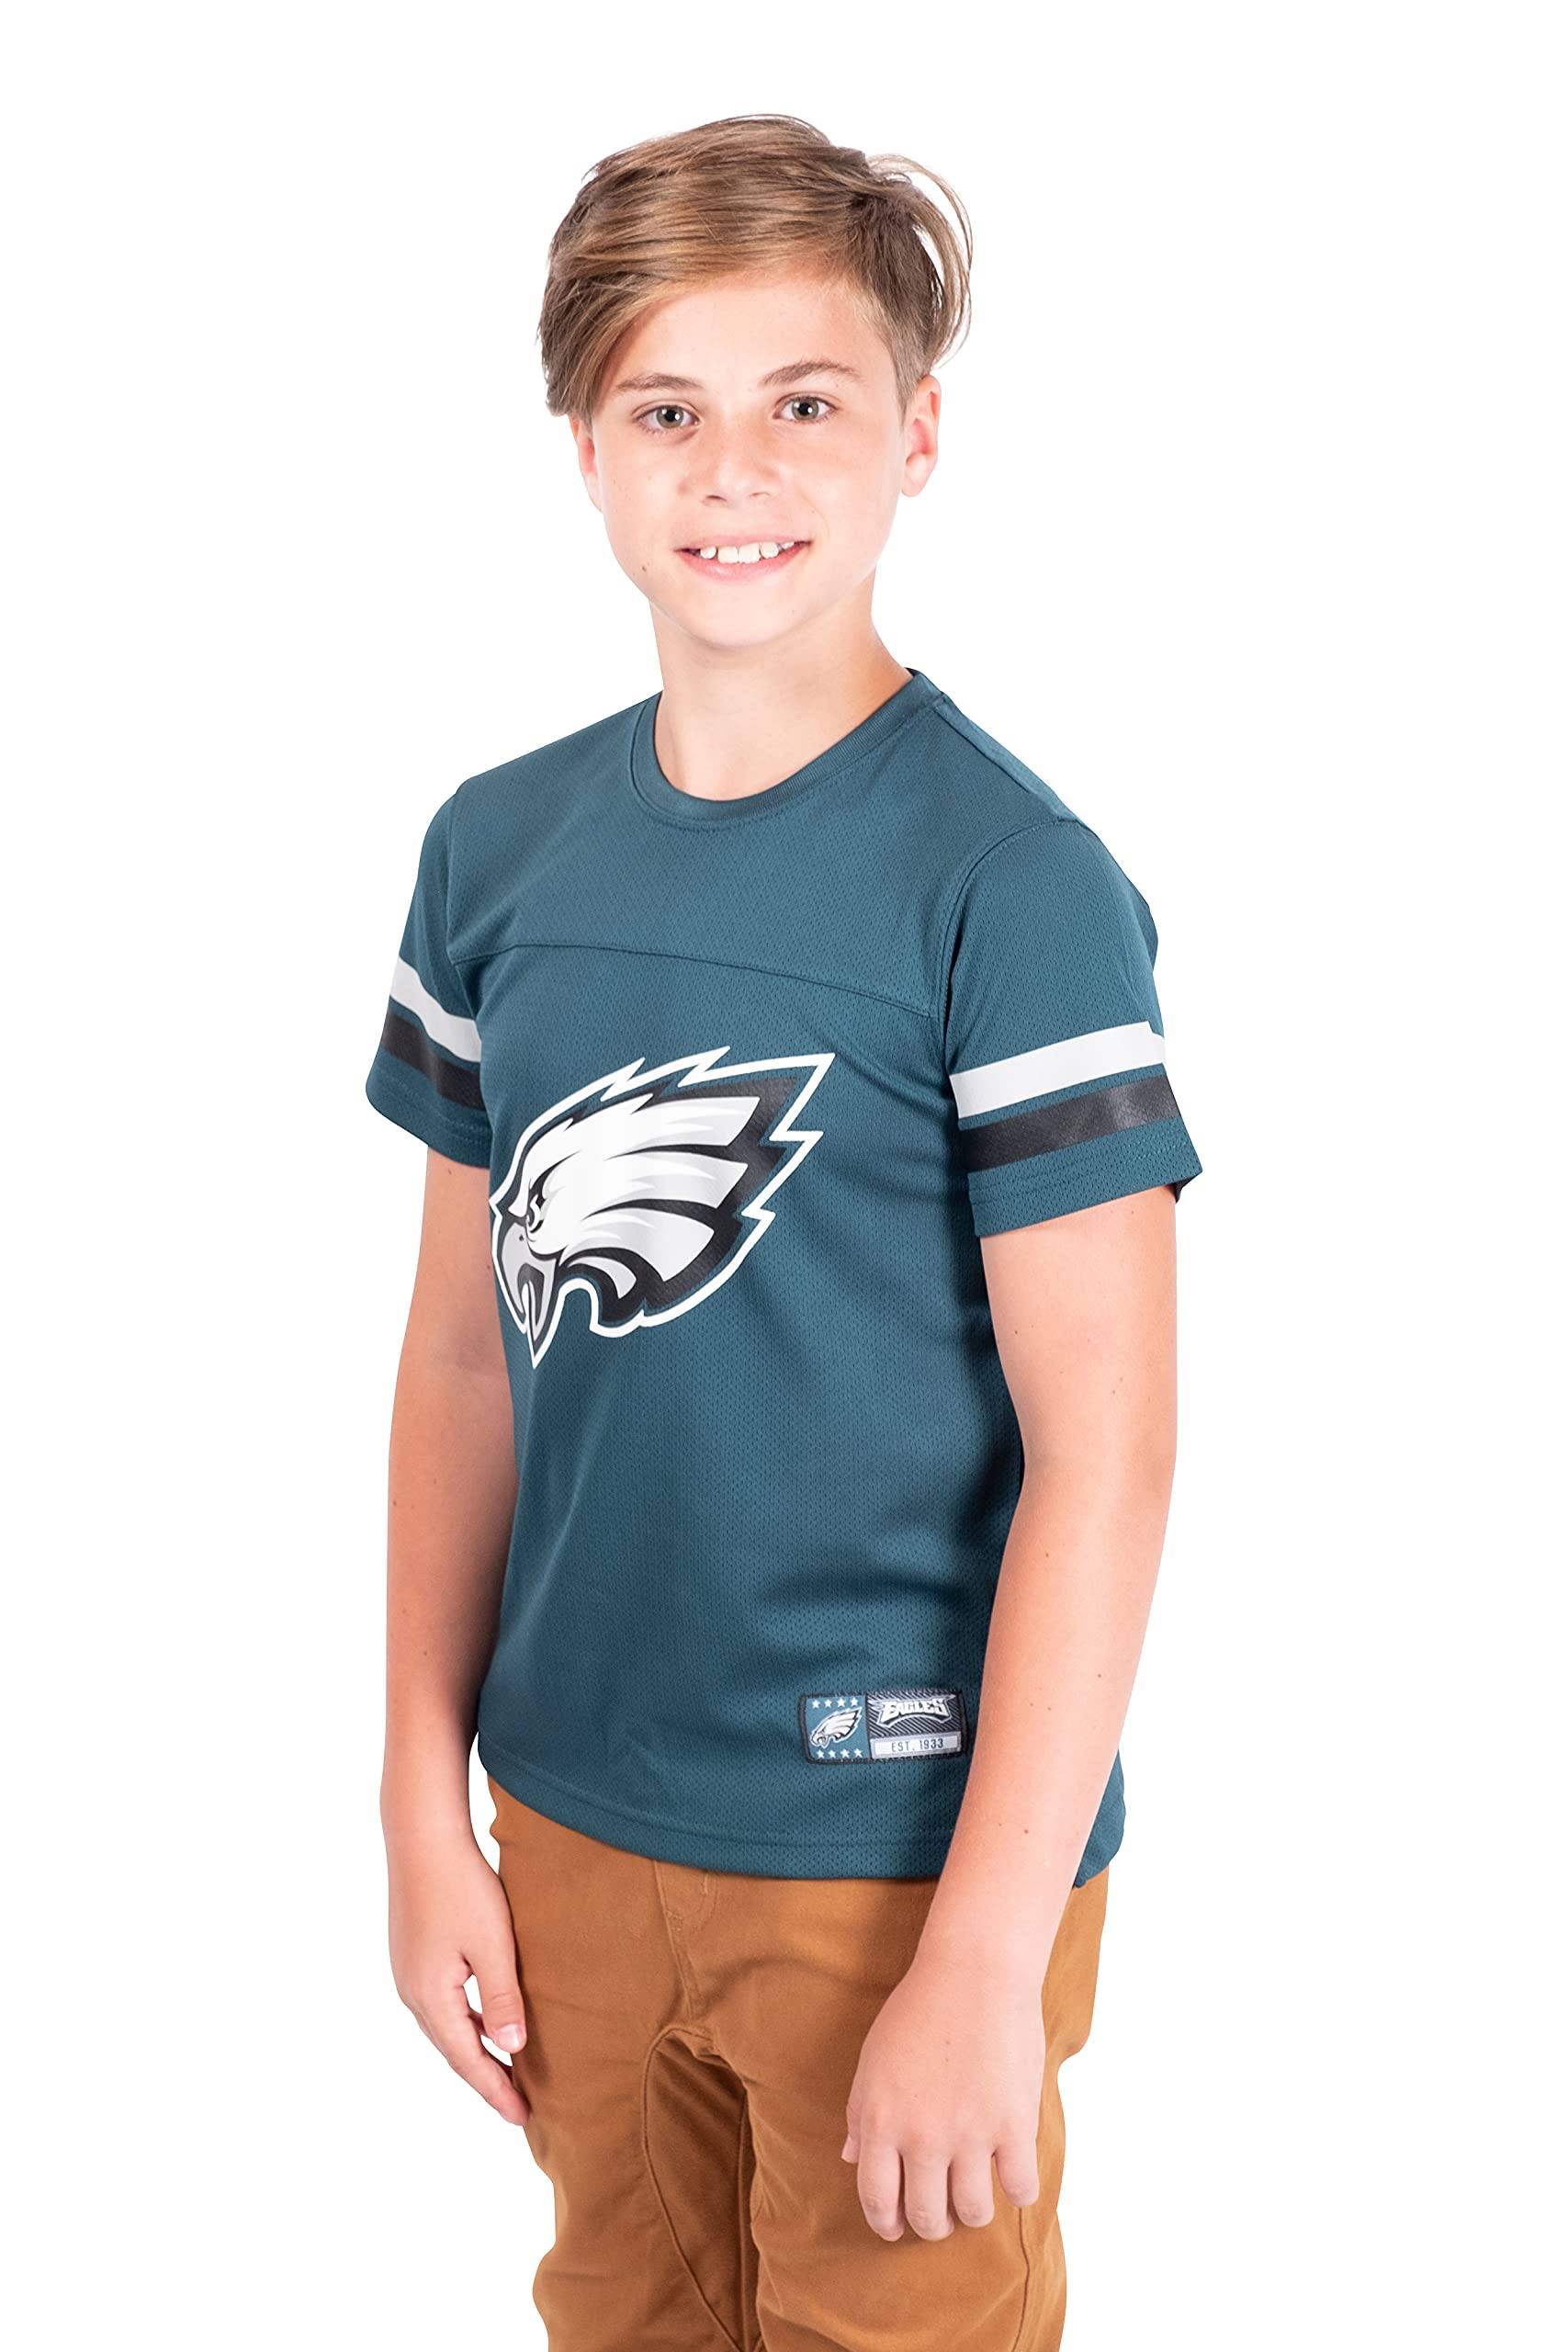 Ultra Game NFL Philadelphia Eagles Youth Soft Mesh Vintage Jersey T-Shirt|Philadelphia Eagles